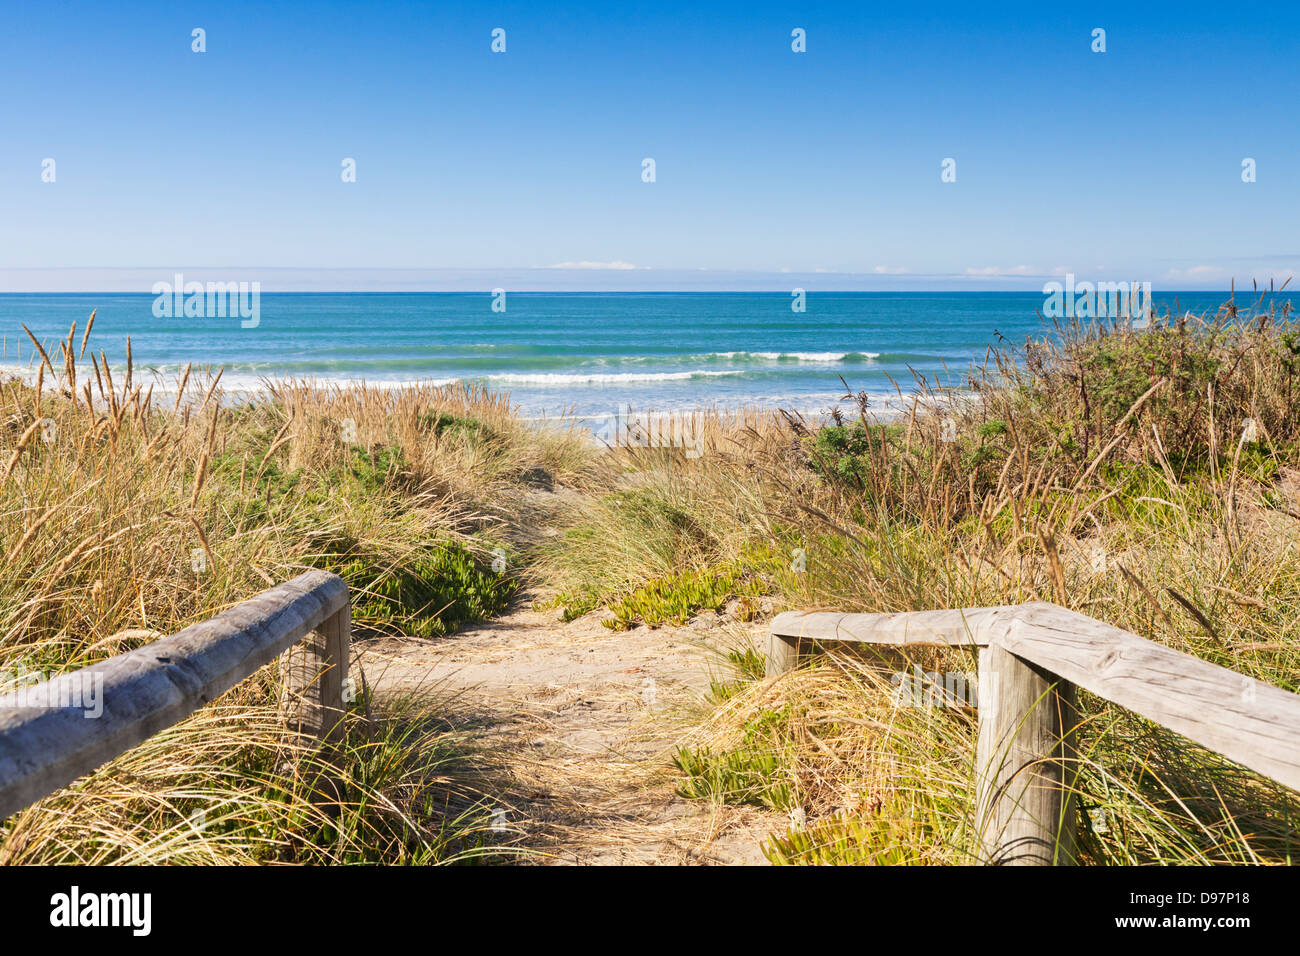 New Brighton beach and sand dunes, Christchurch, New Zealand. Stock Photo